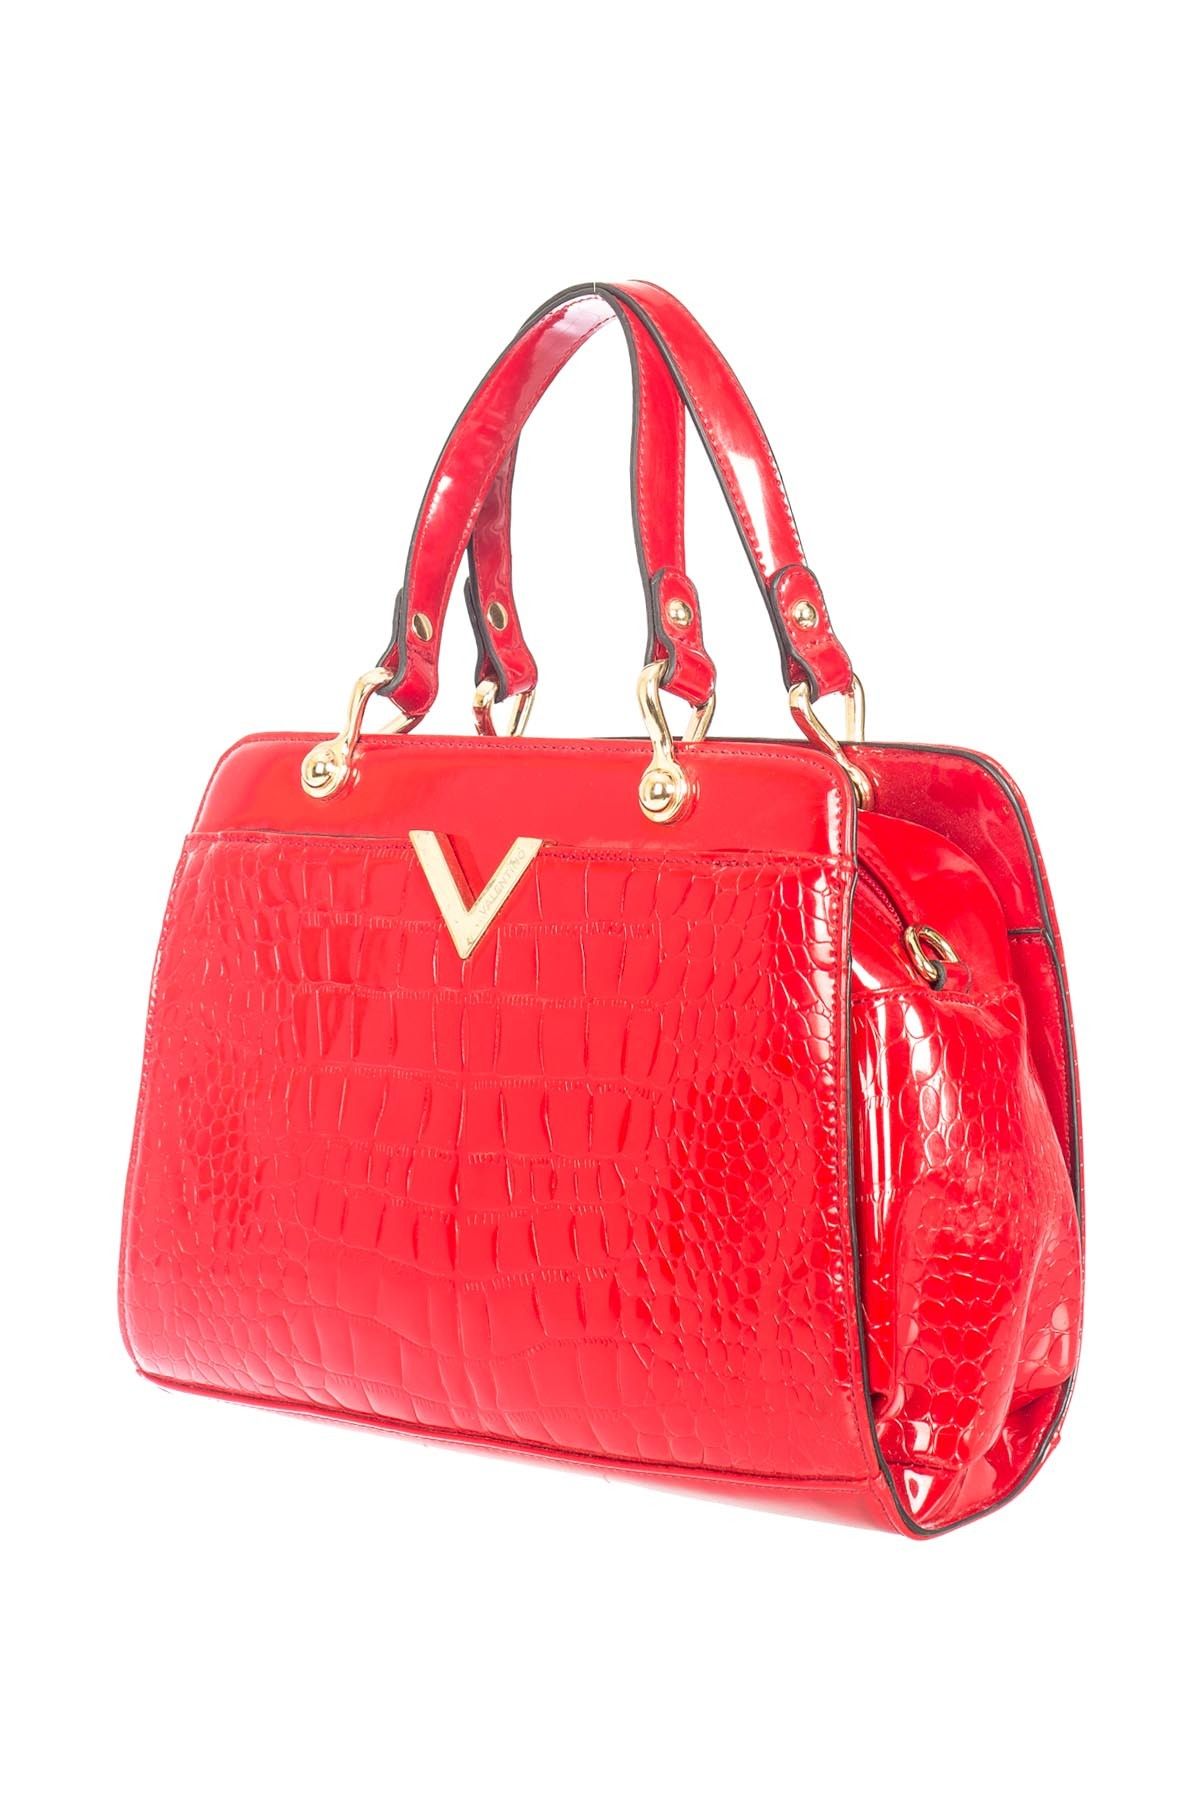 Valentino Kadın Kırmızı Omuz Çantası Pr.W.3.171.6091